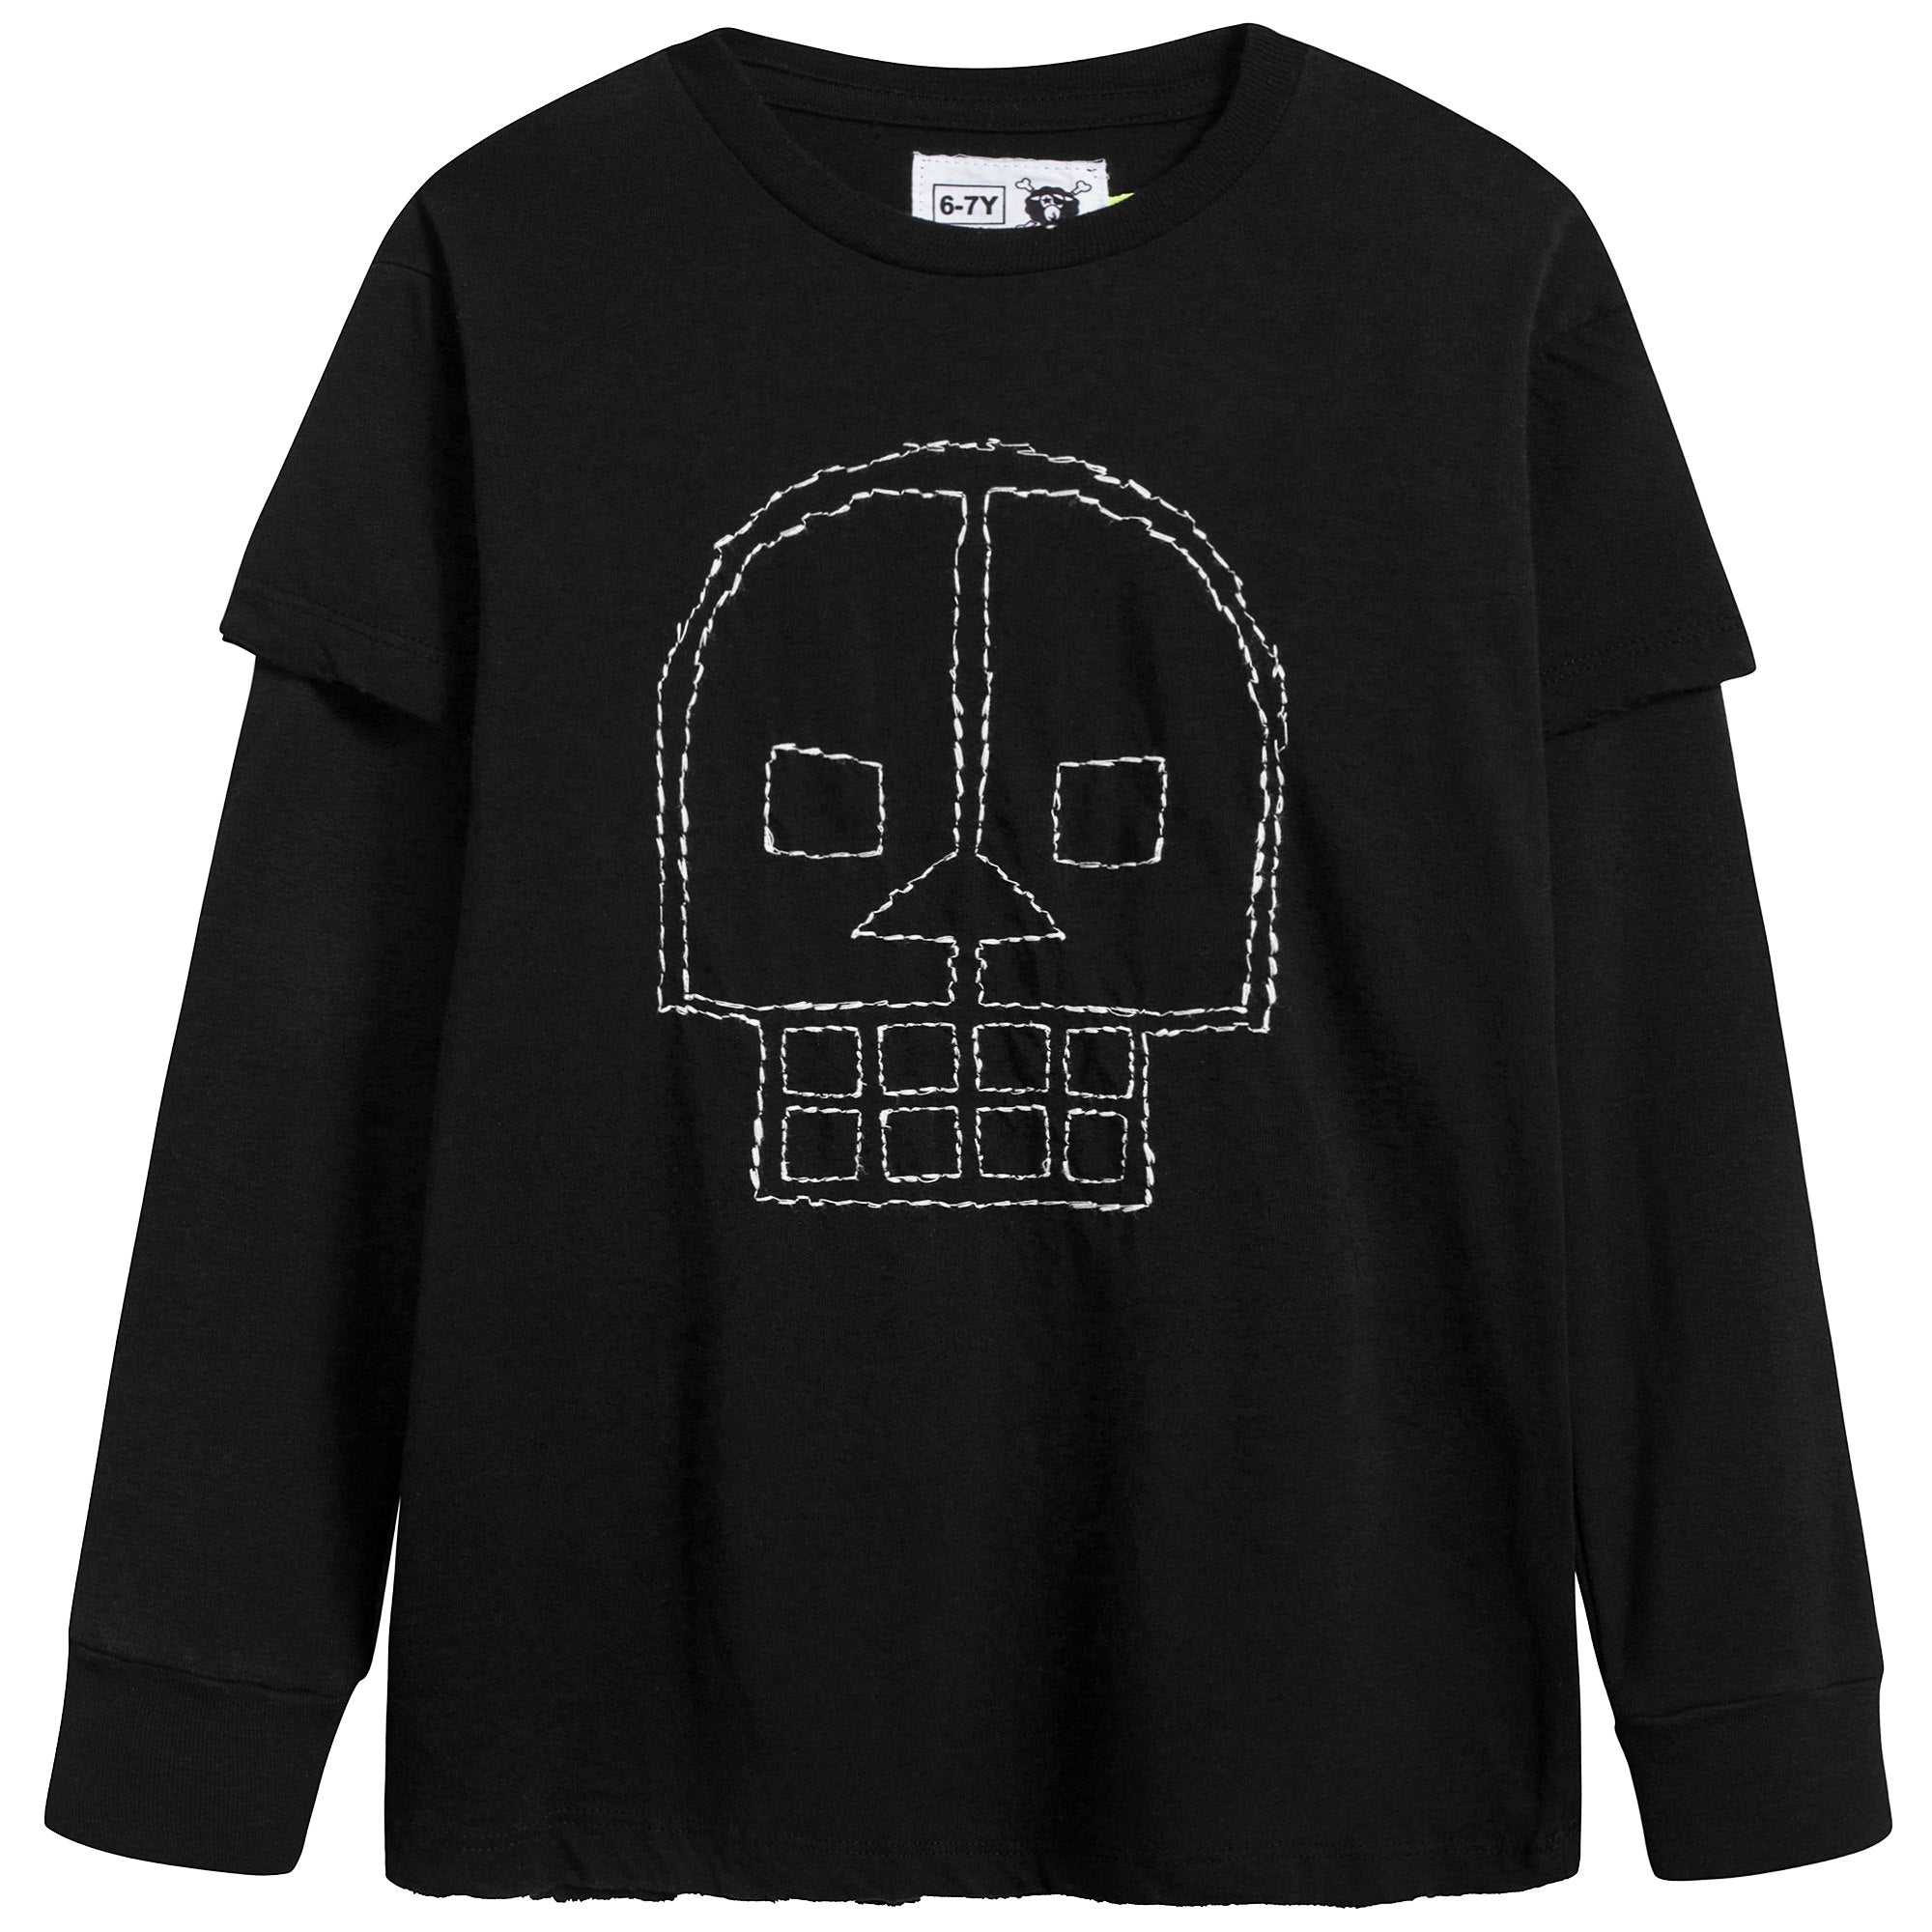 Boys Black Cotton Embroidered Skull T-shirt